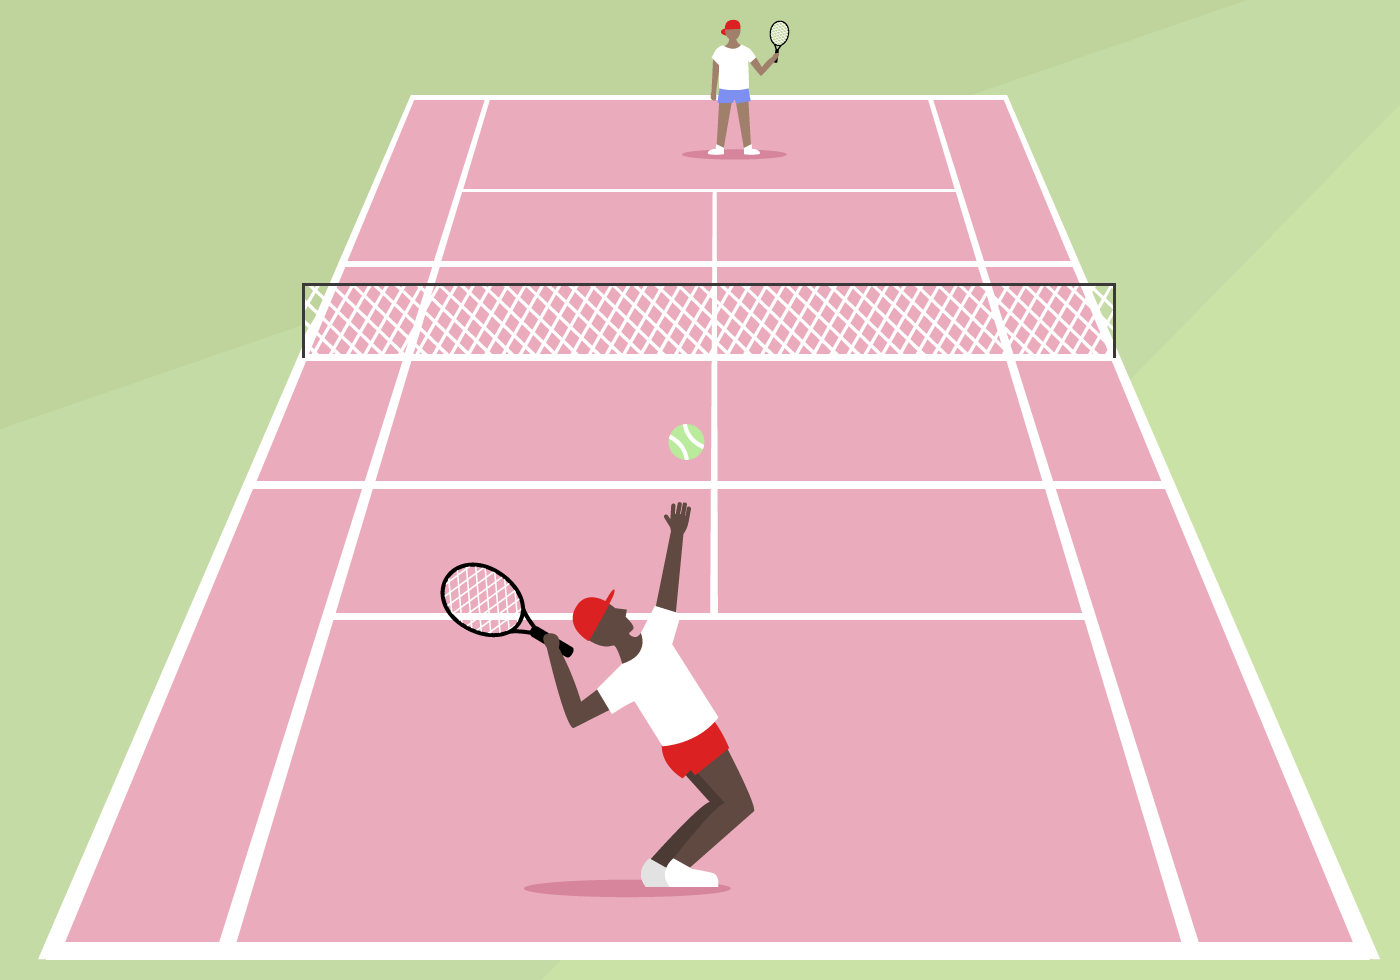 Free Tennis Court Vector - Download Free Vector Art, Stock Graphics